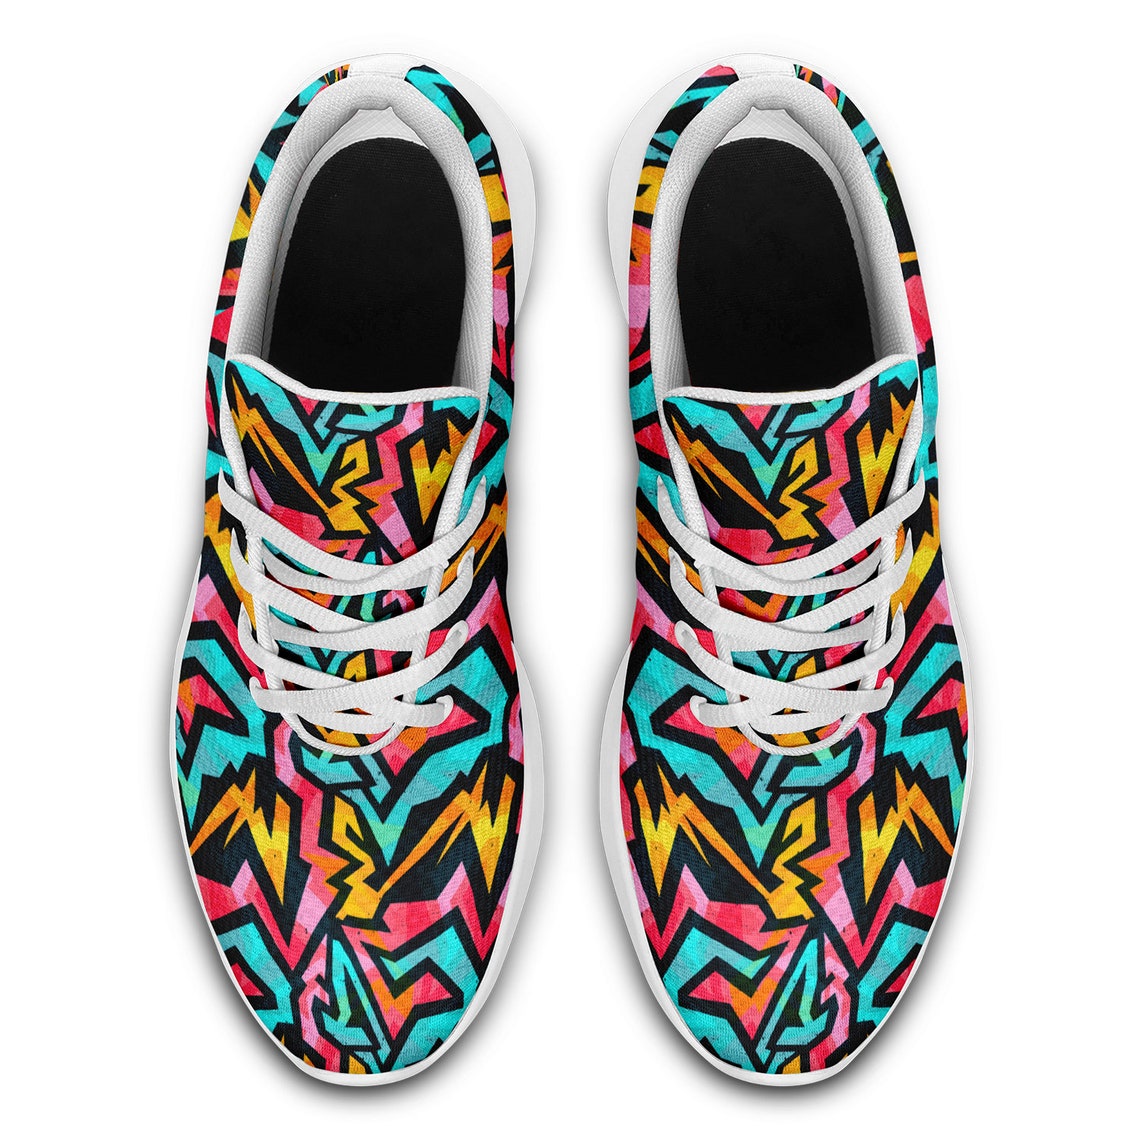 Graffiti Street Design Sneakers / Graffiti Art Shoes Sports | Etsy